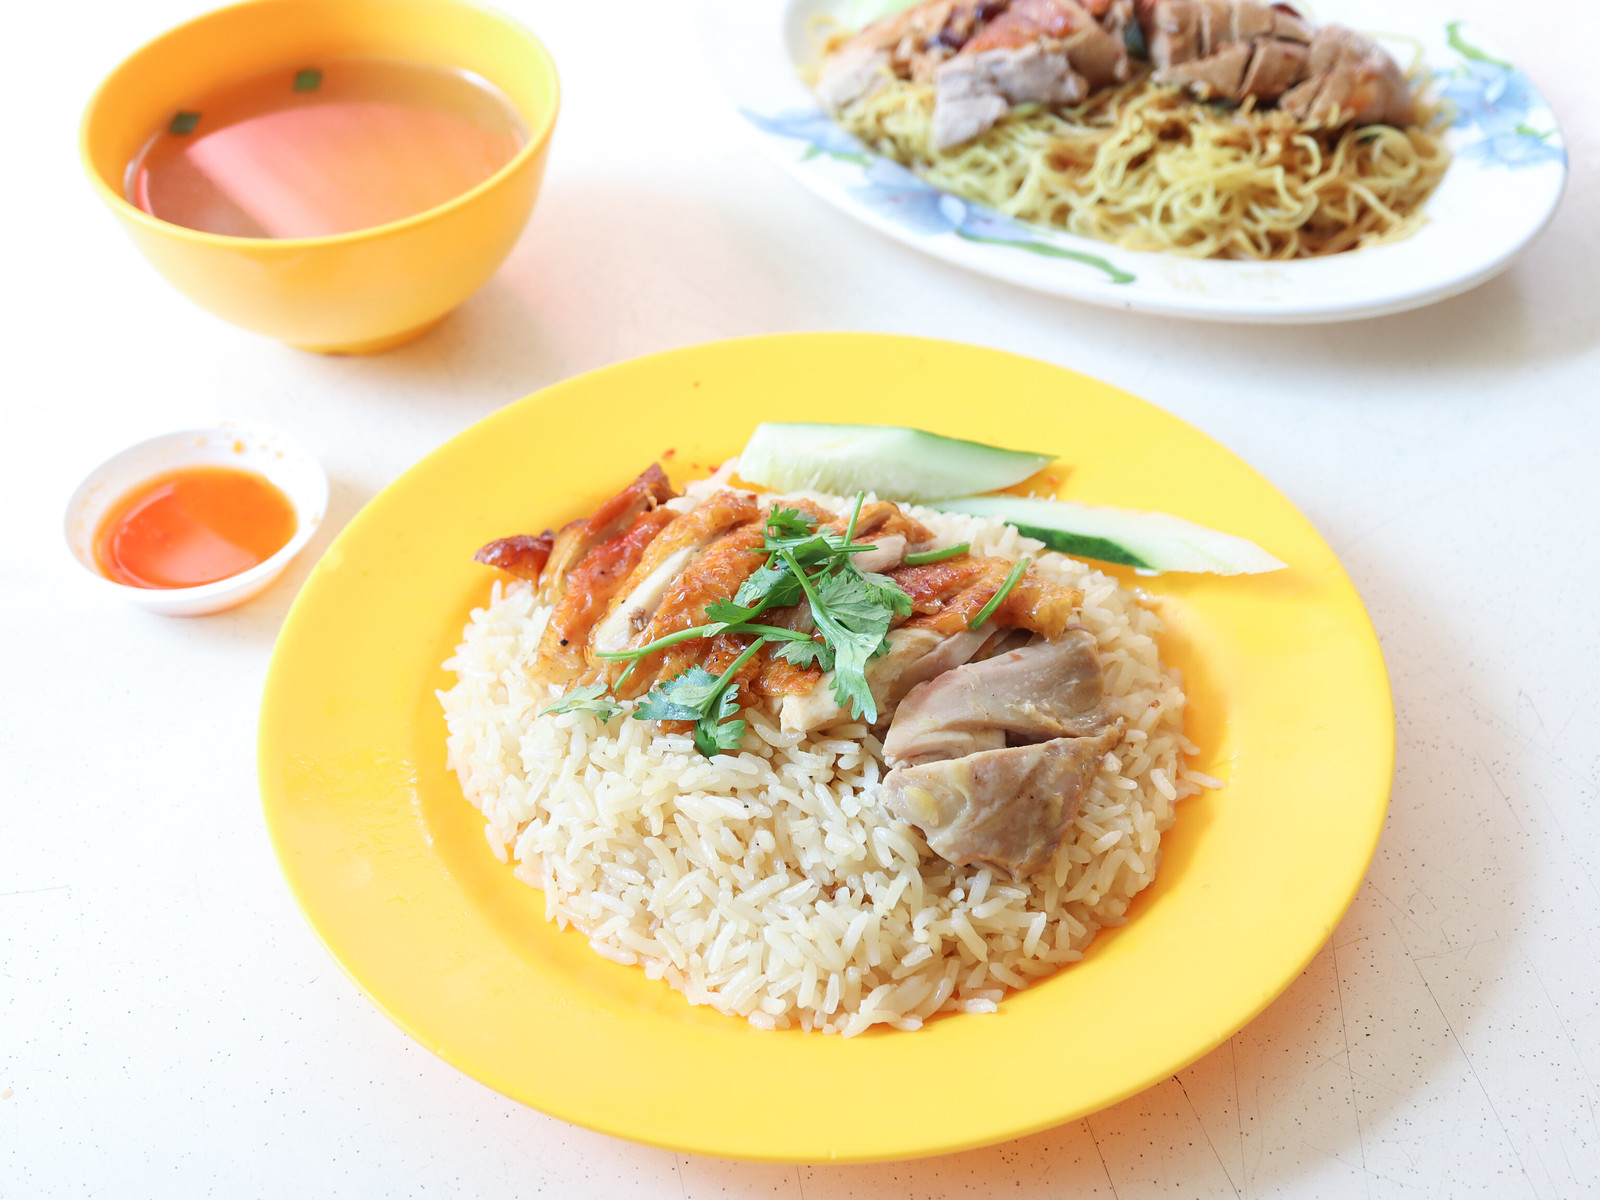 xiang ji roast chicken rice & noodles - roasted chicken rice